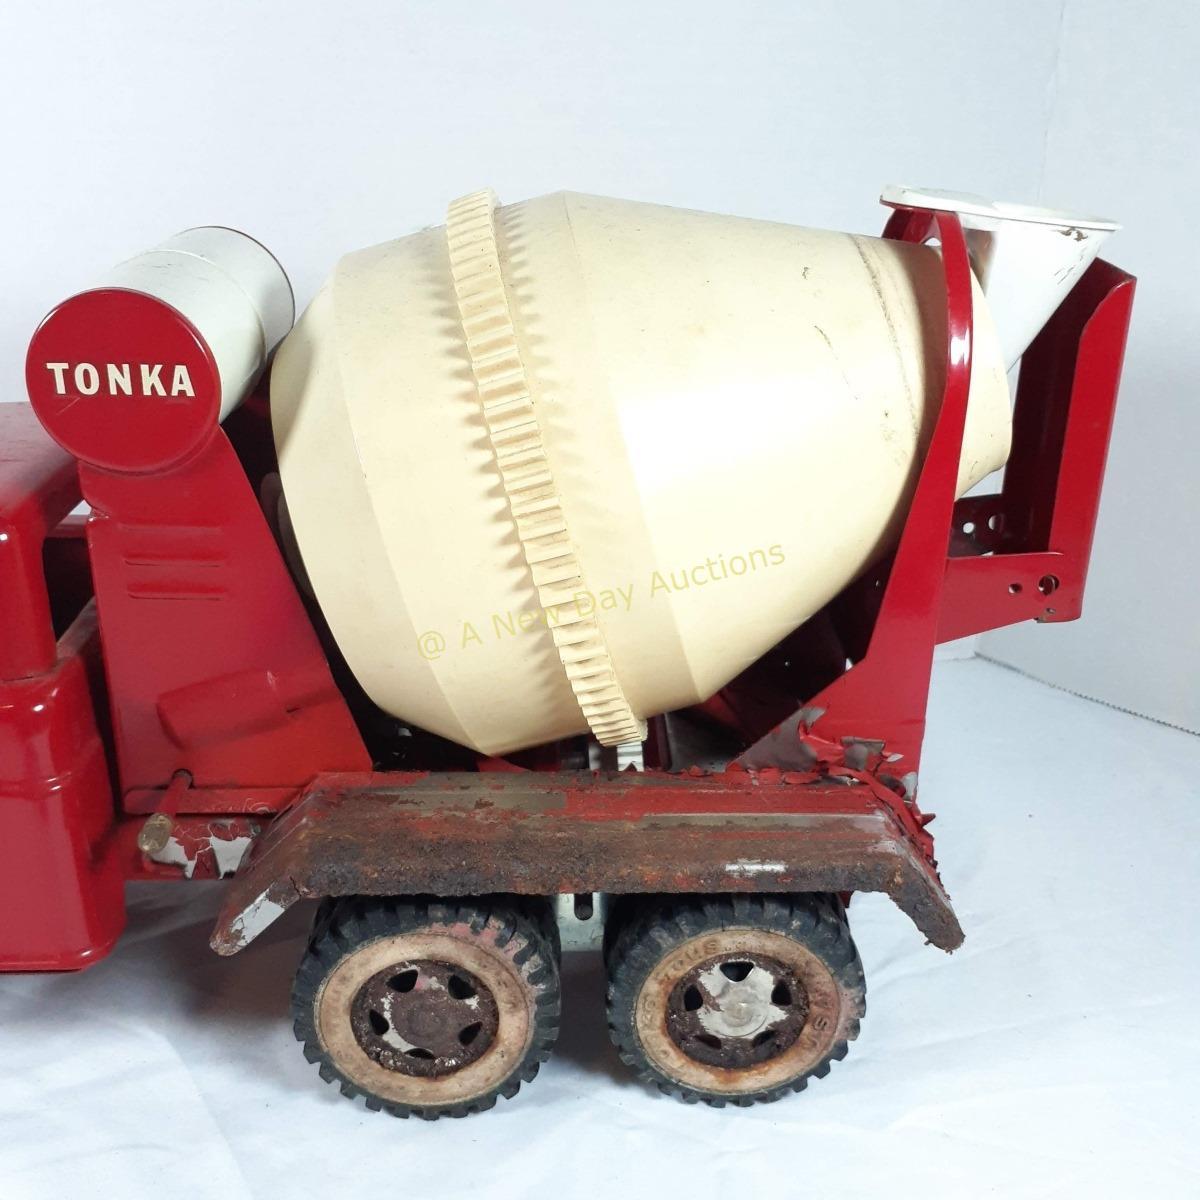 Vintage Tonka cement mixer